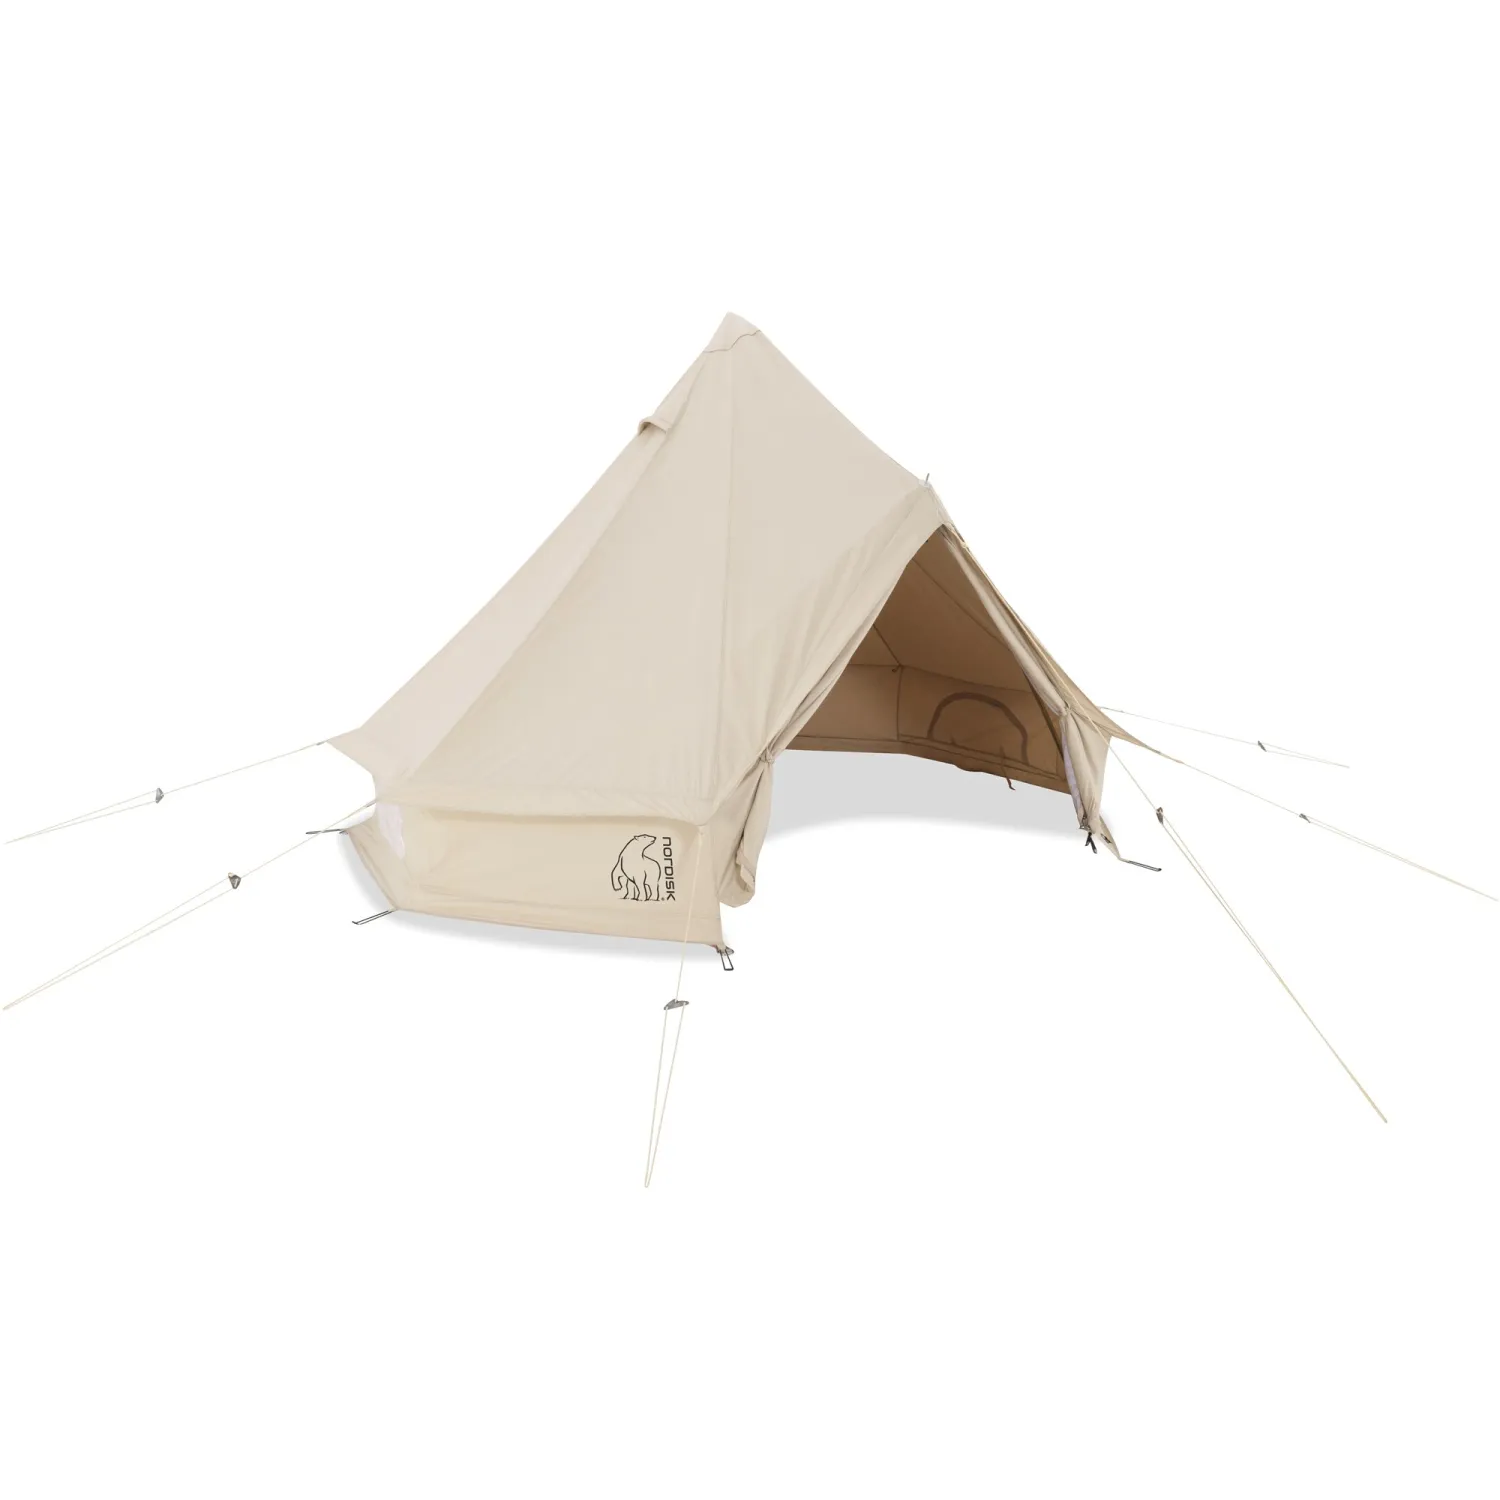 01_asgard-12-6-m2-142023-nordisk-classic-retro-bell-tent-technical-cotton-front-open.jpg